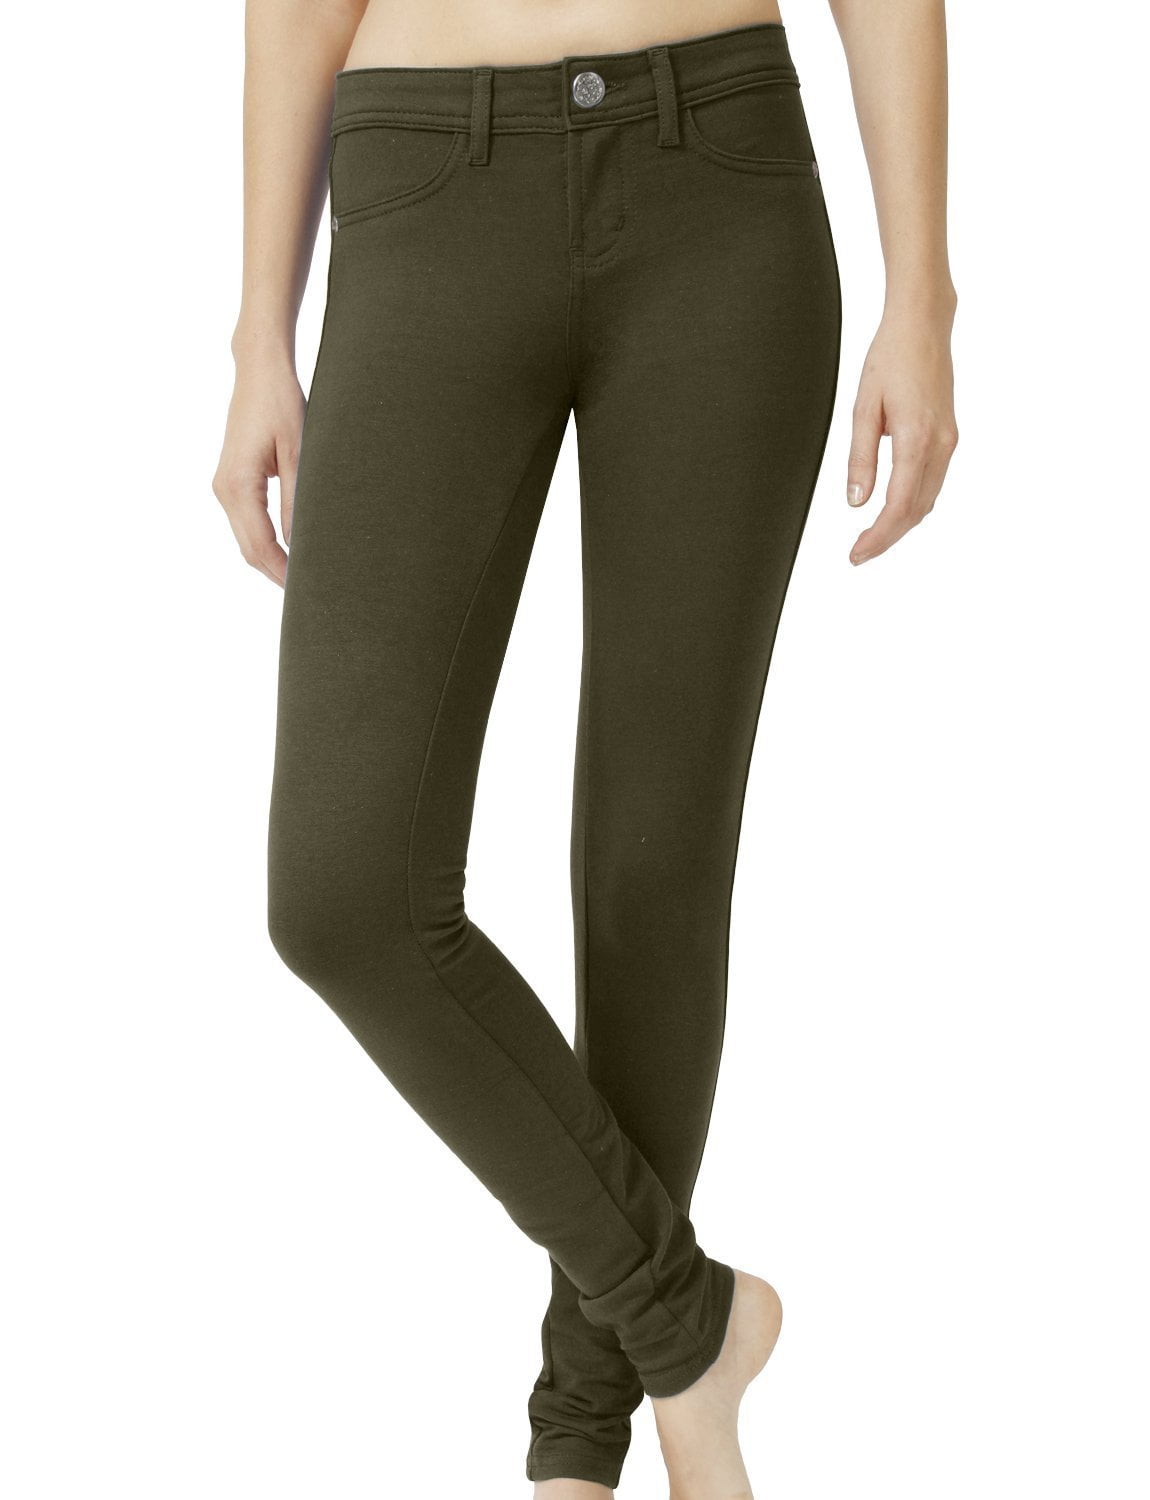 J. METHOD Women’s Skinny Pants Soft Everyday Solid Color Basic Slim Tight  Fit Stretch Legging Jeggings Jeans NEWP77 Dark Brown 3X